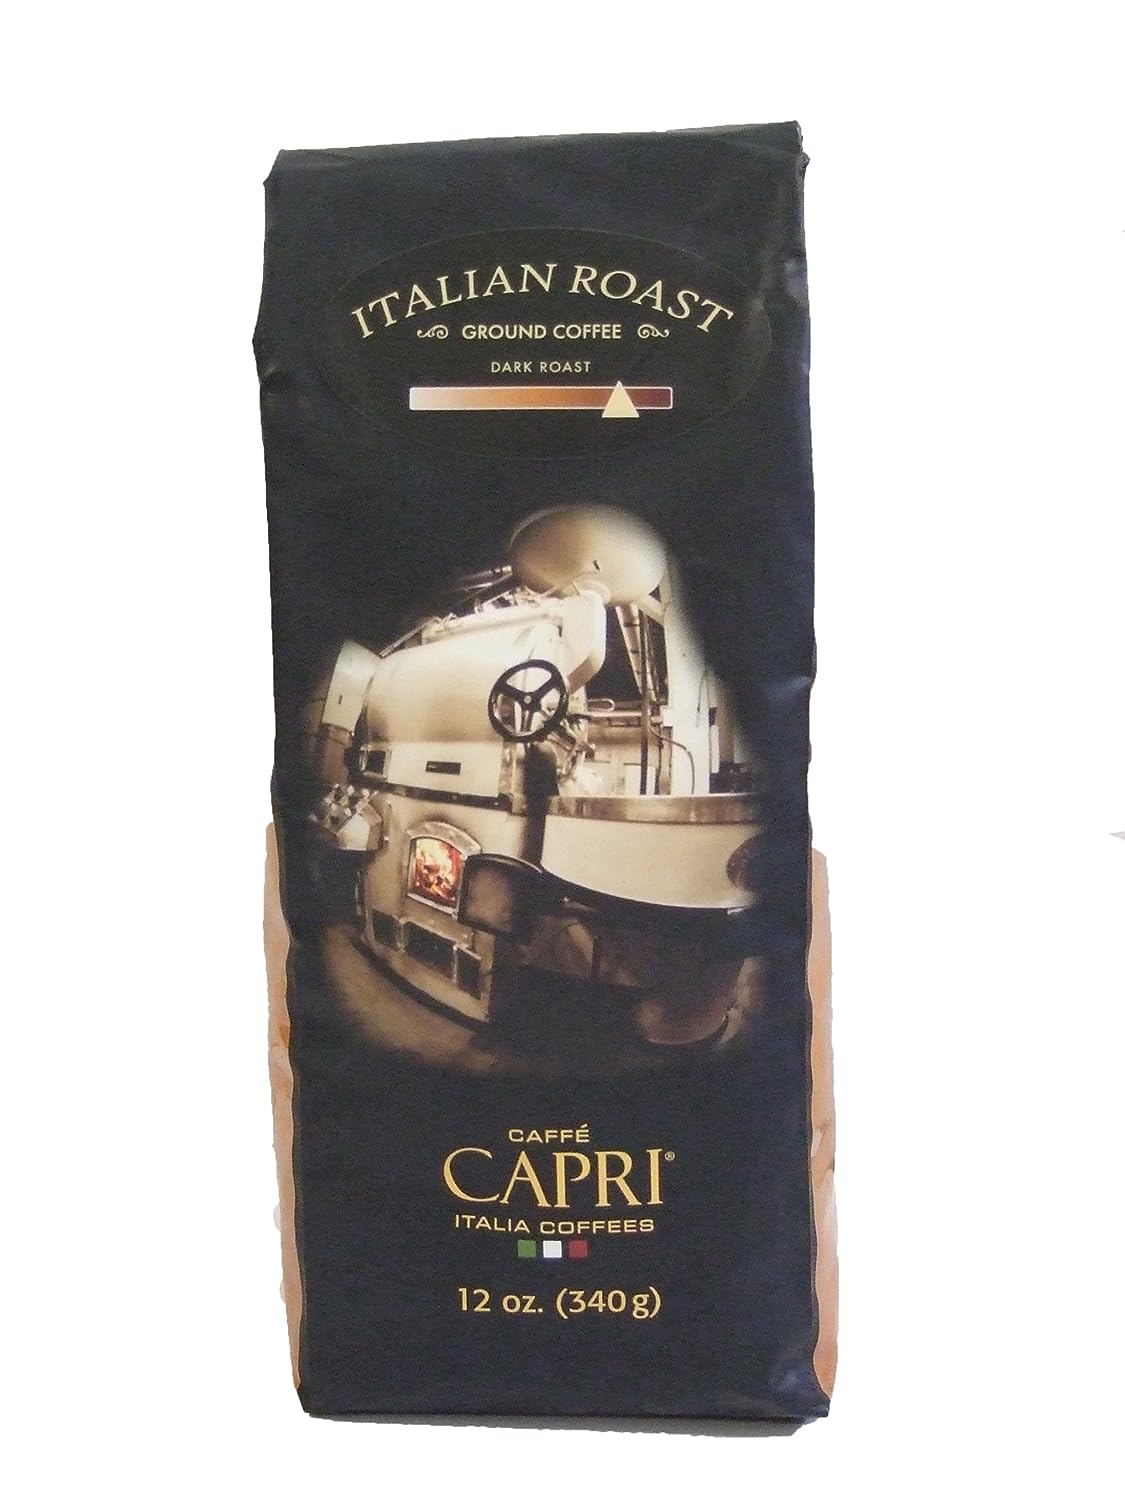 Caffe Capri Coffee, Italian Roast